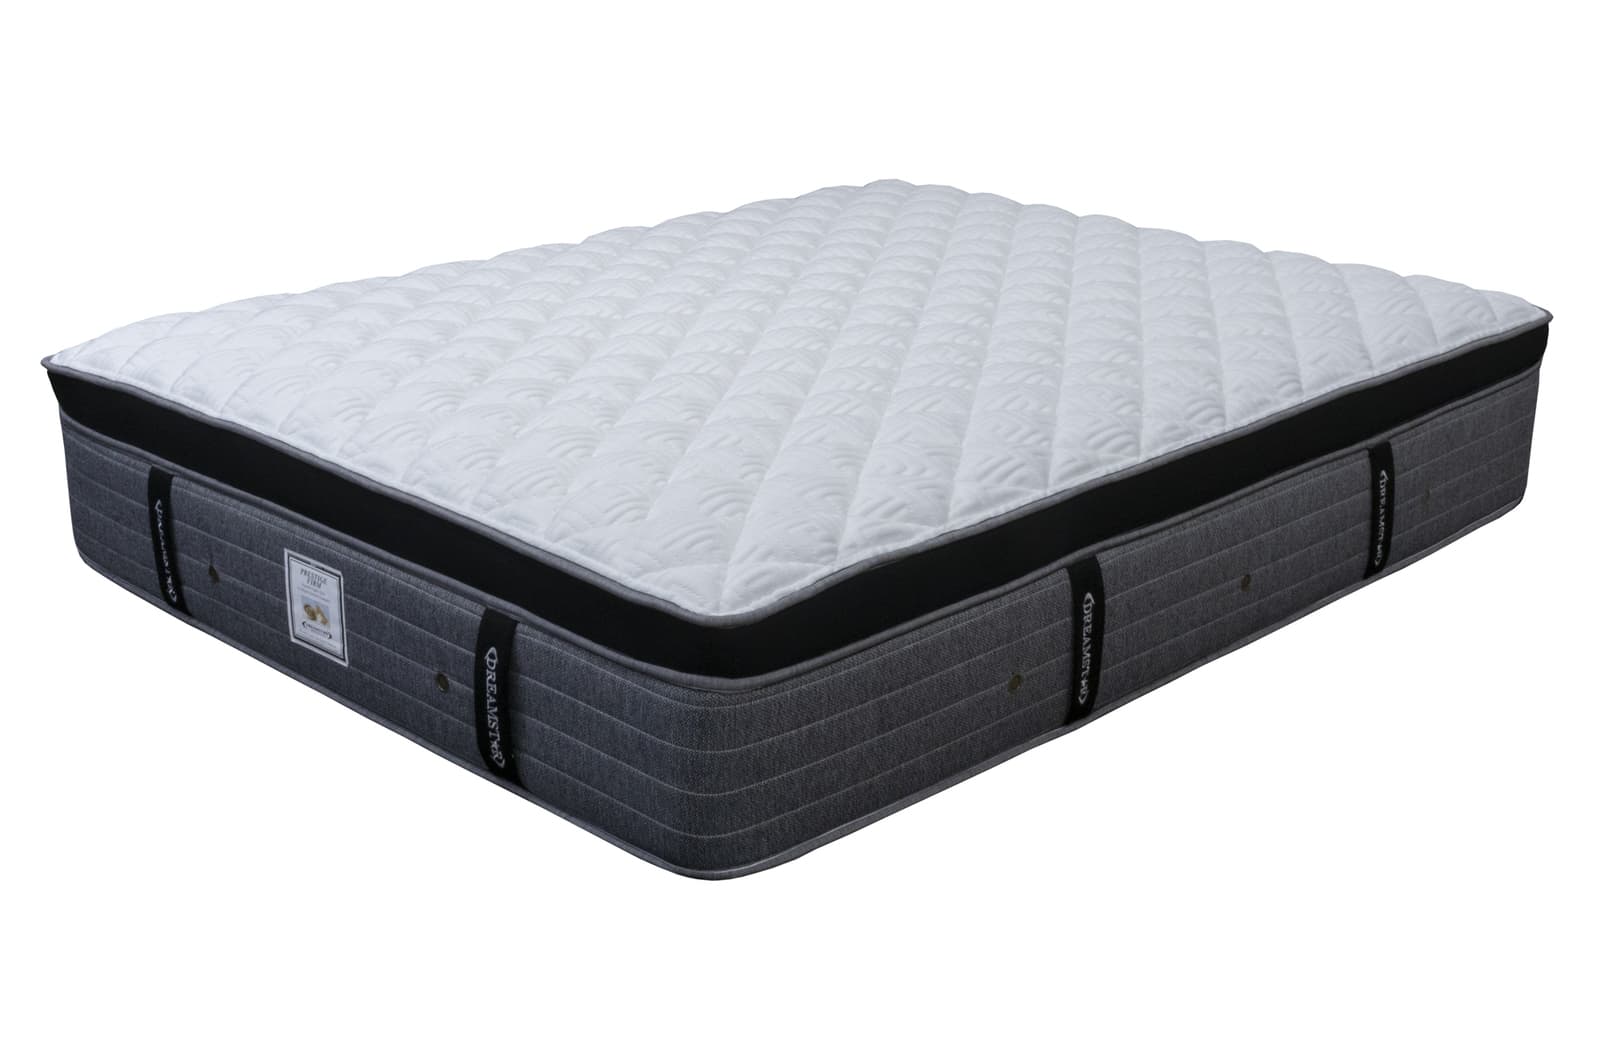 mattress for sale in gallatin tn